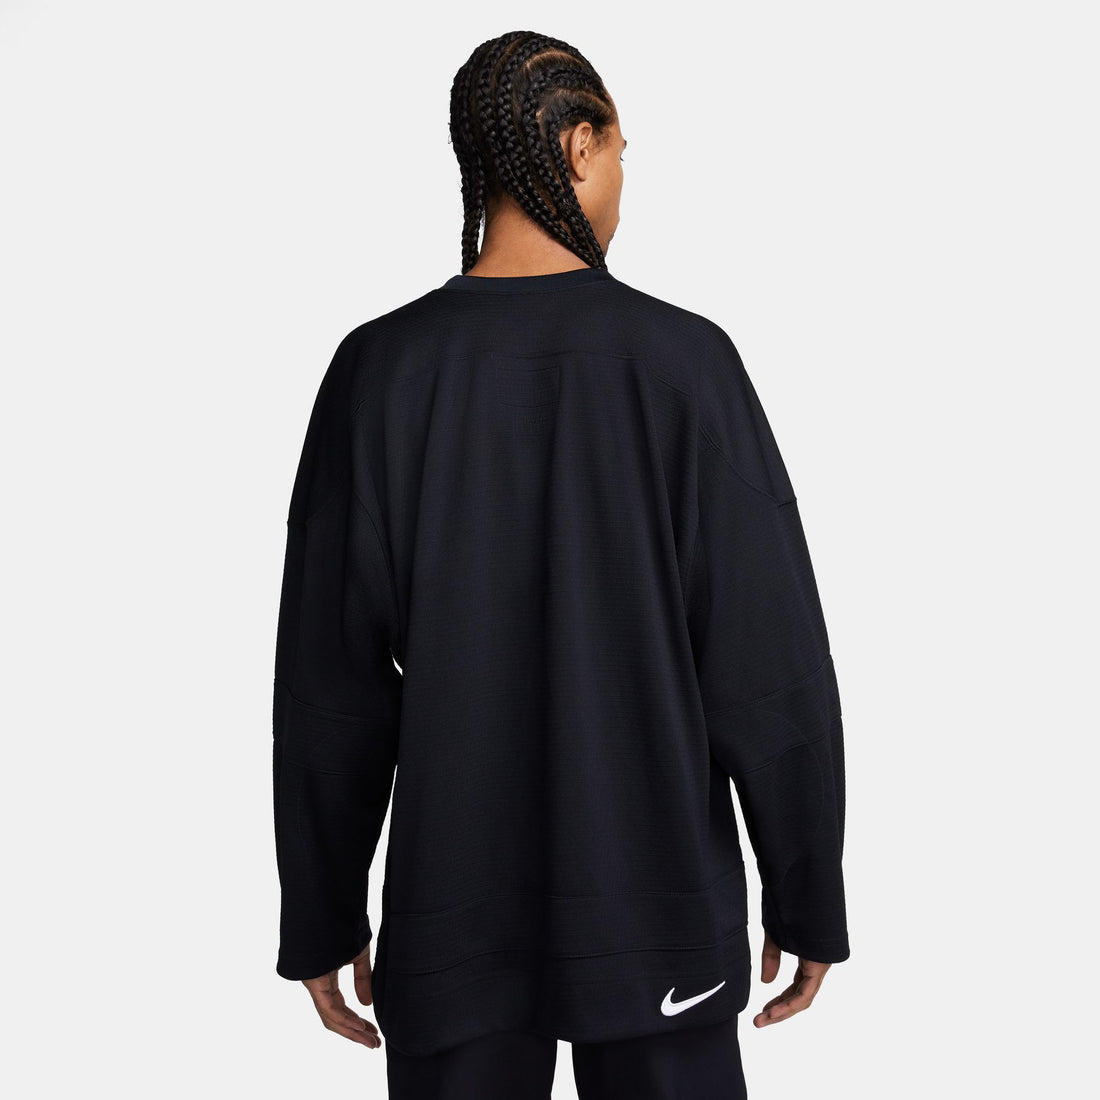 Nike Authentic's Hockey Jersey (Black/Black/White)